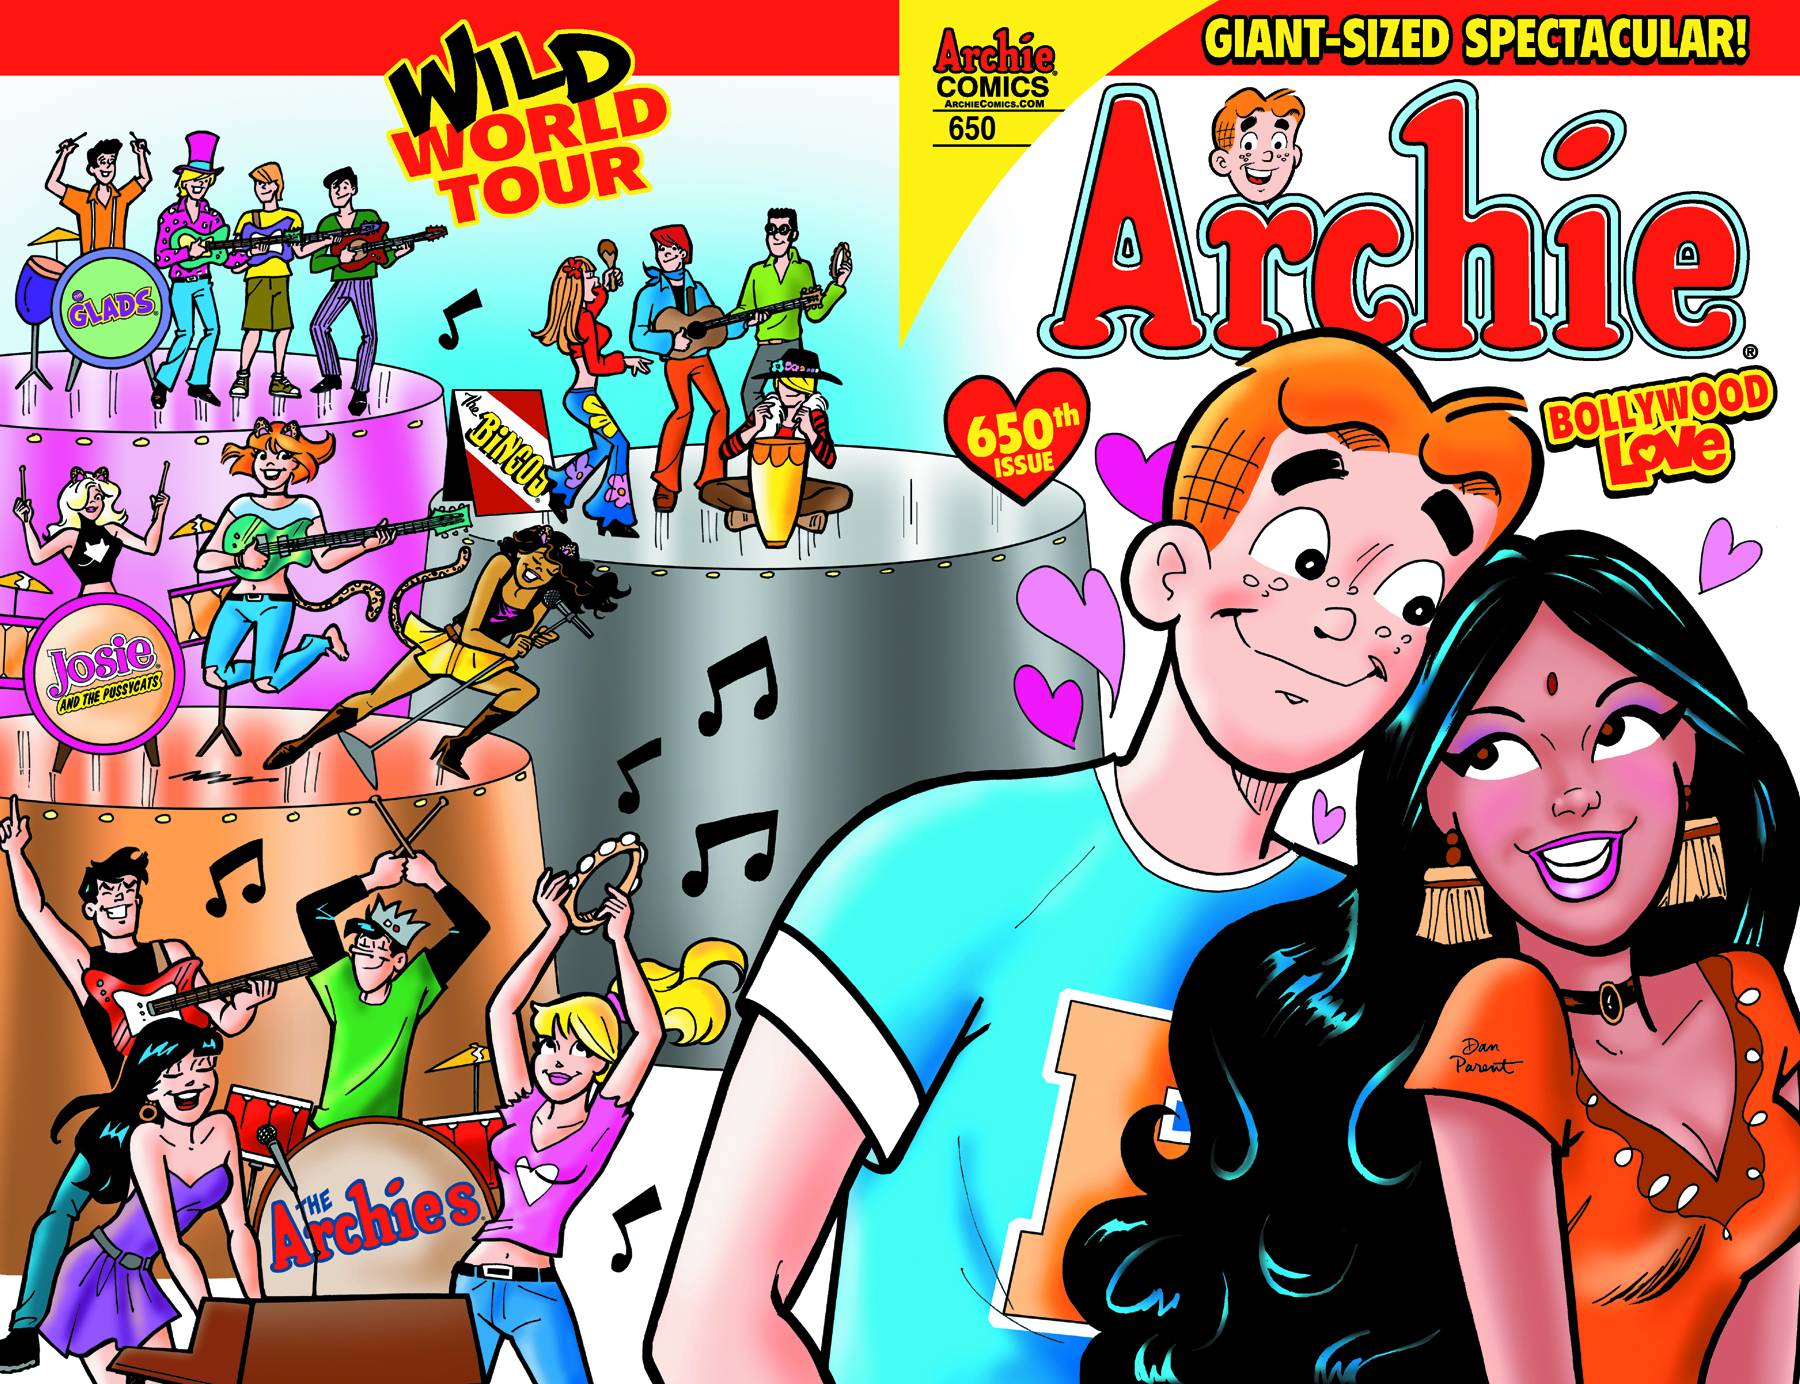 Archie #650 Regular Cover